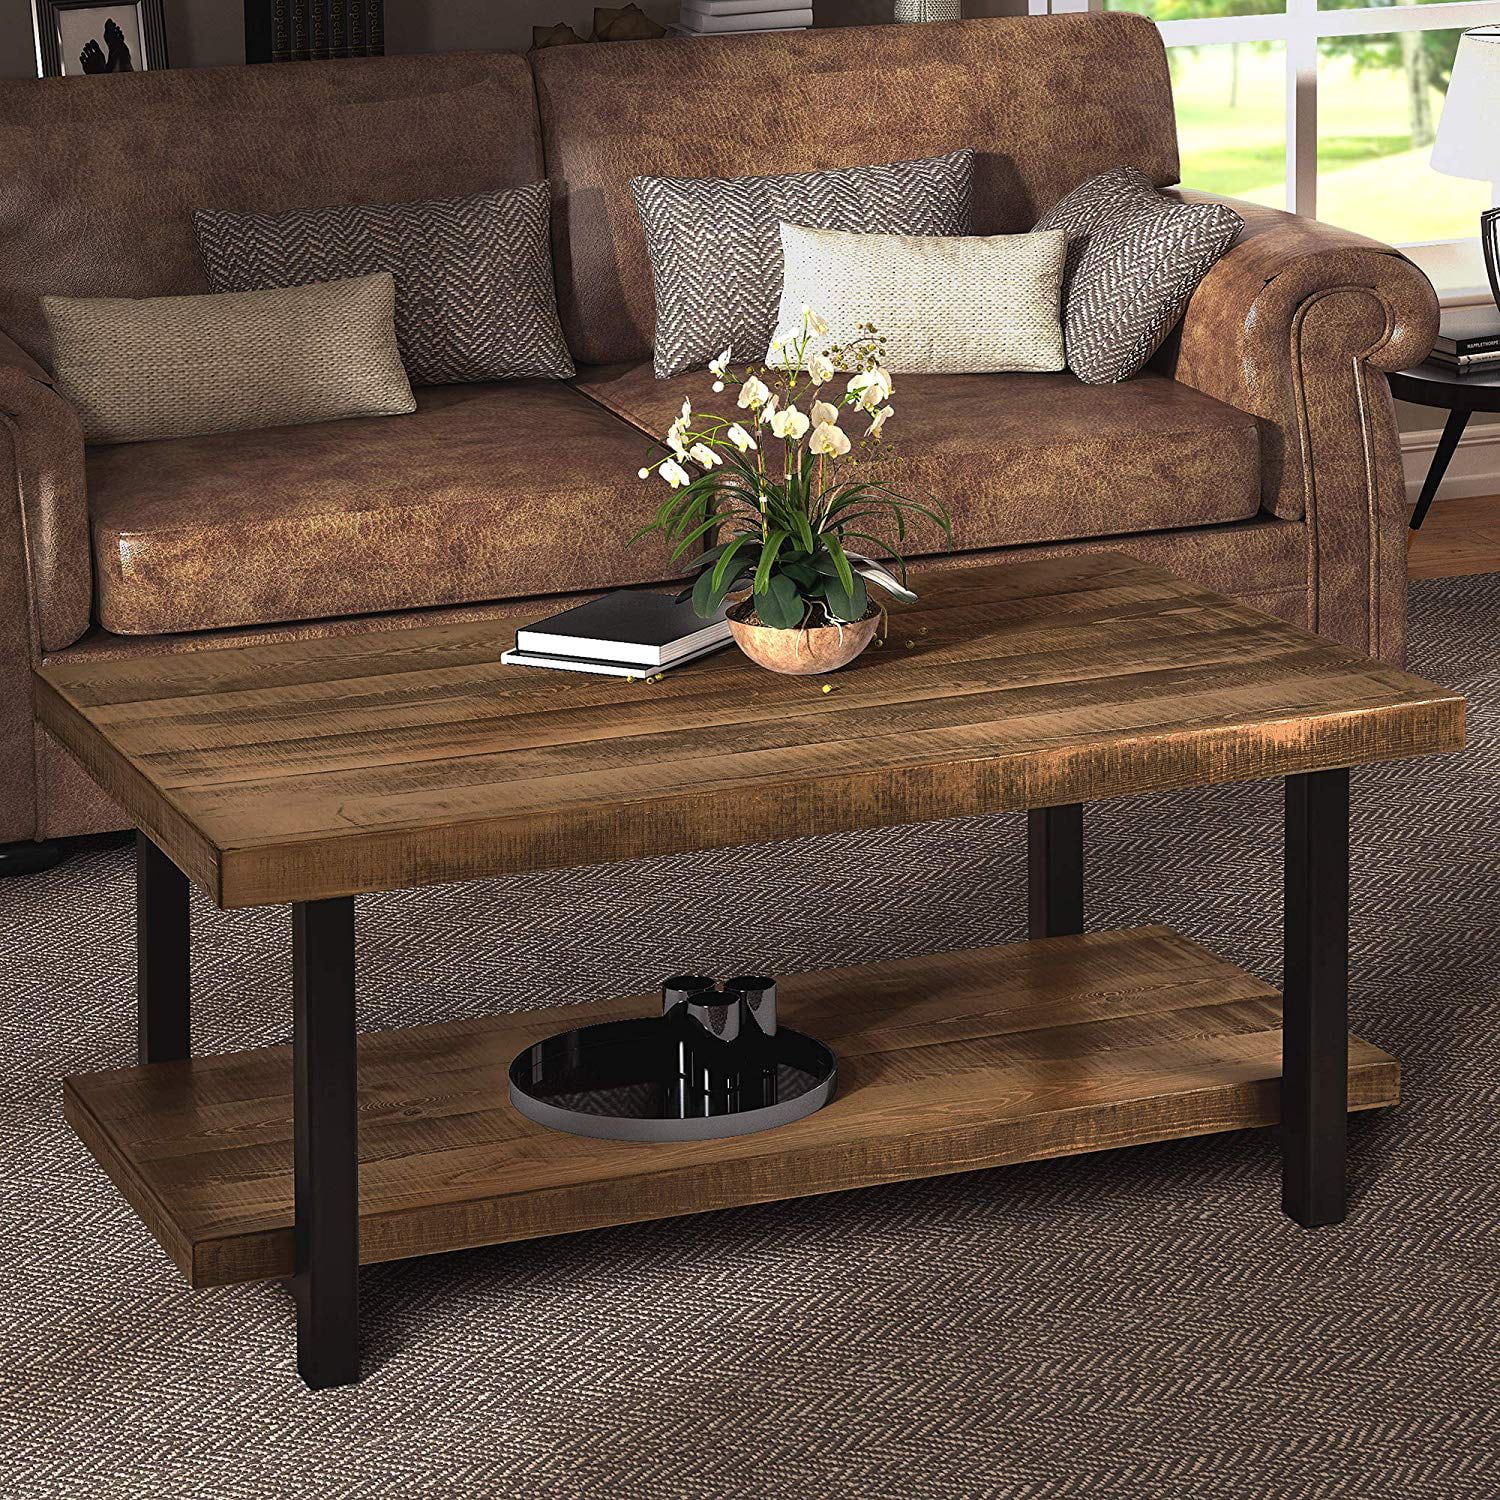 Harper&bright Designs Industrial Rectangular Pine Wood Coffee Table Inside Brown Rustic Coffee Tables (Gallery 8 of 20)